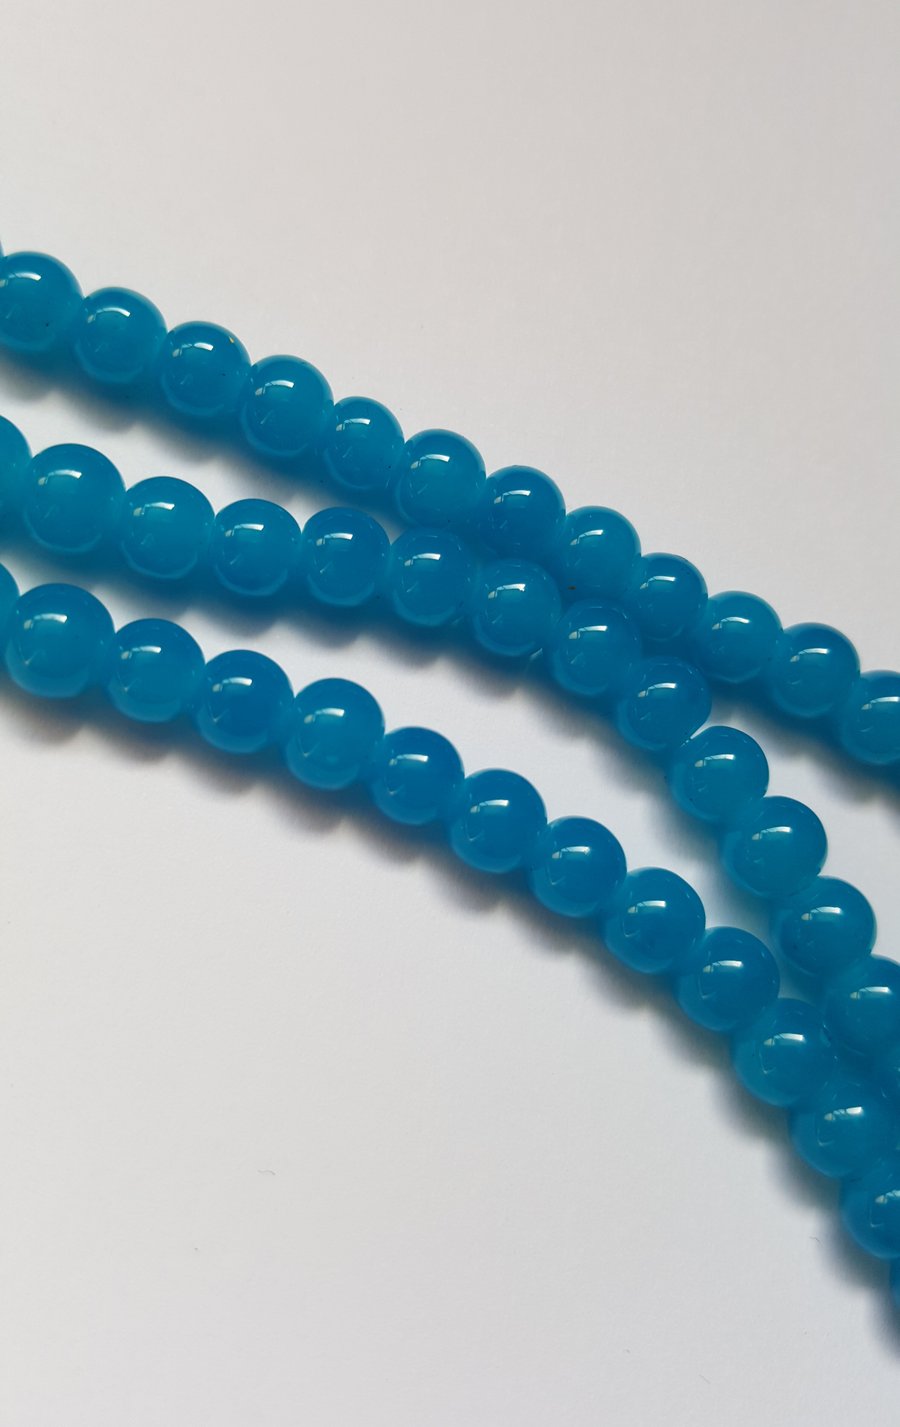 50 x Imitation Jade Glass Beads - Round - 6mm - Bright Blue 